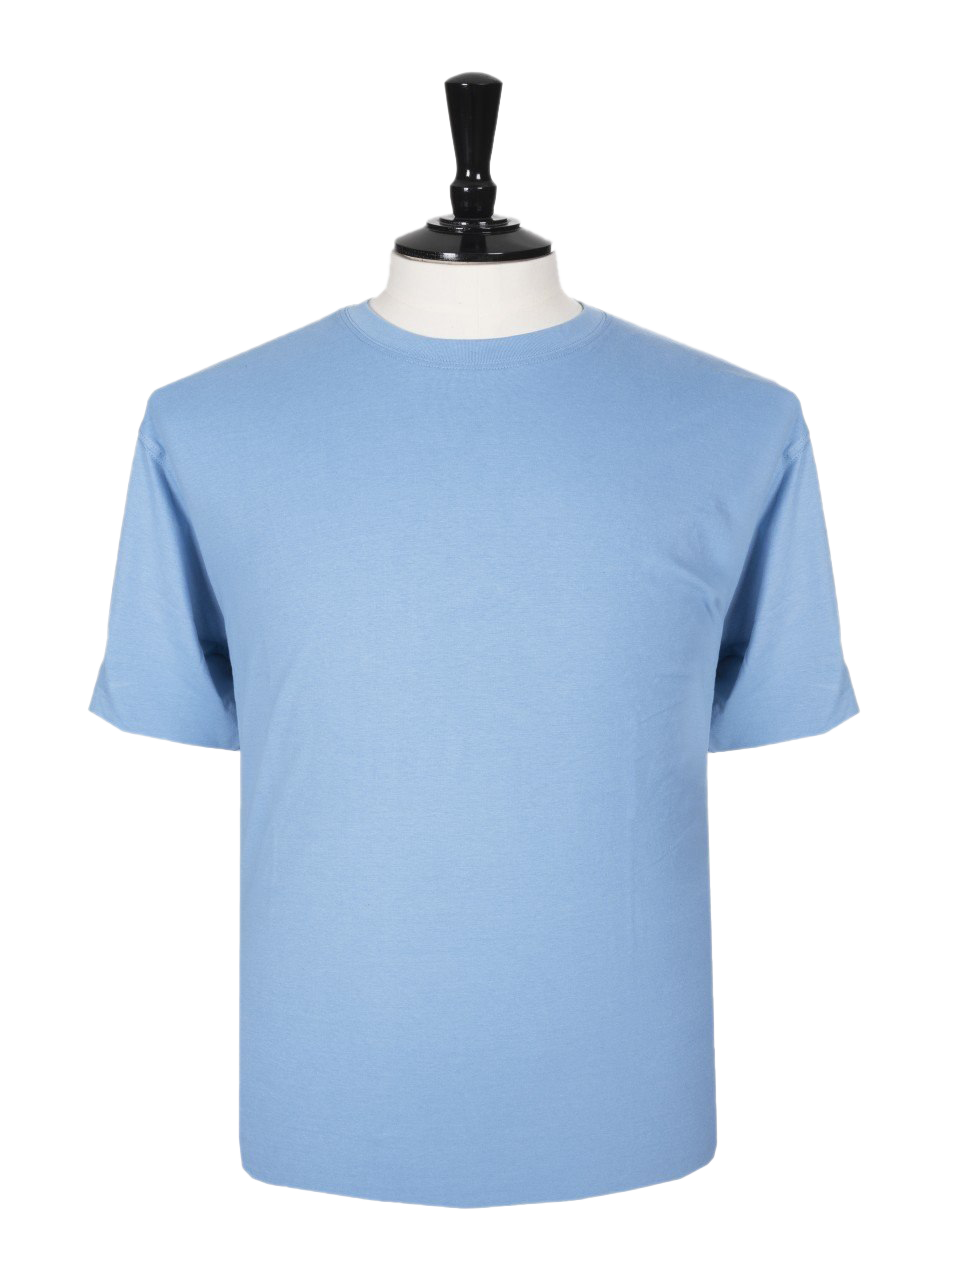 T-shirt bleu clair Pic PNG